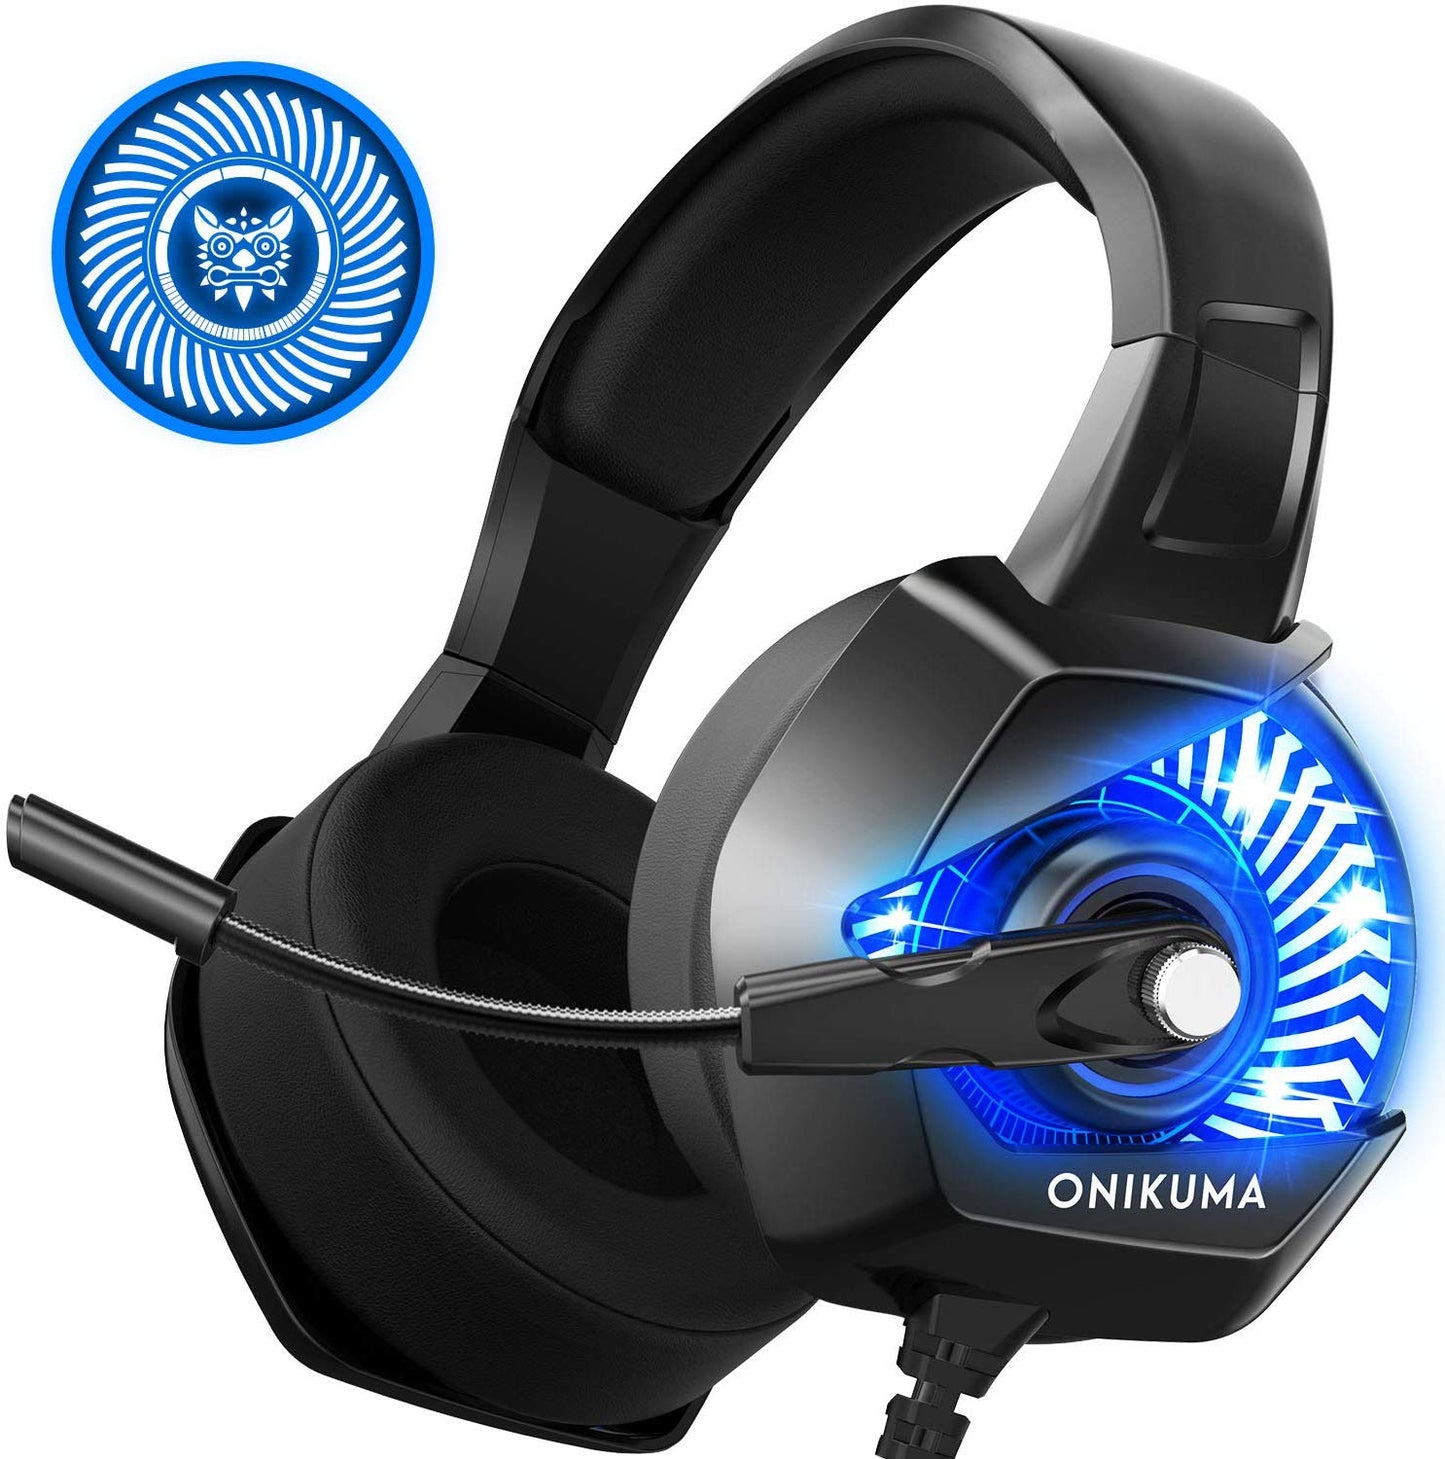 ONIKUMA K6 Gaming Headset